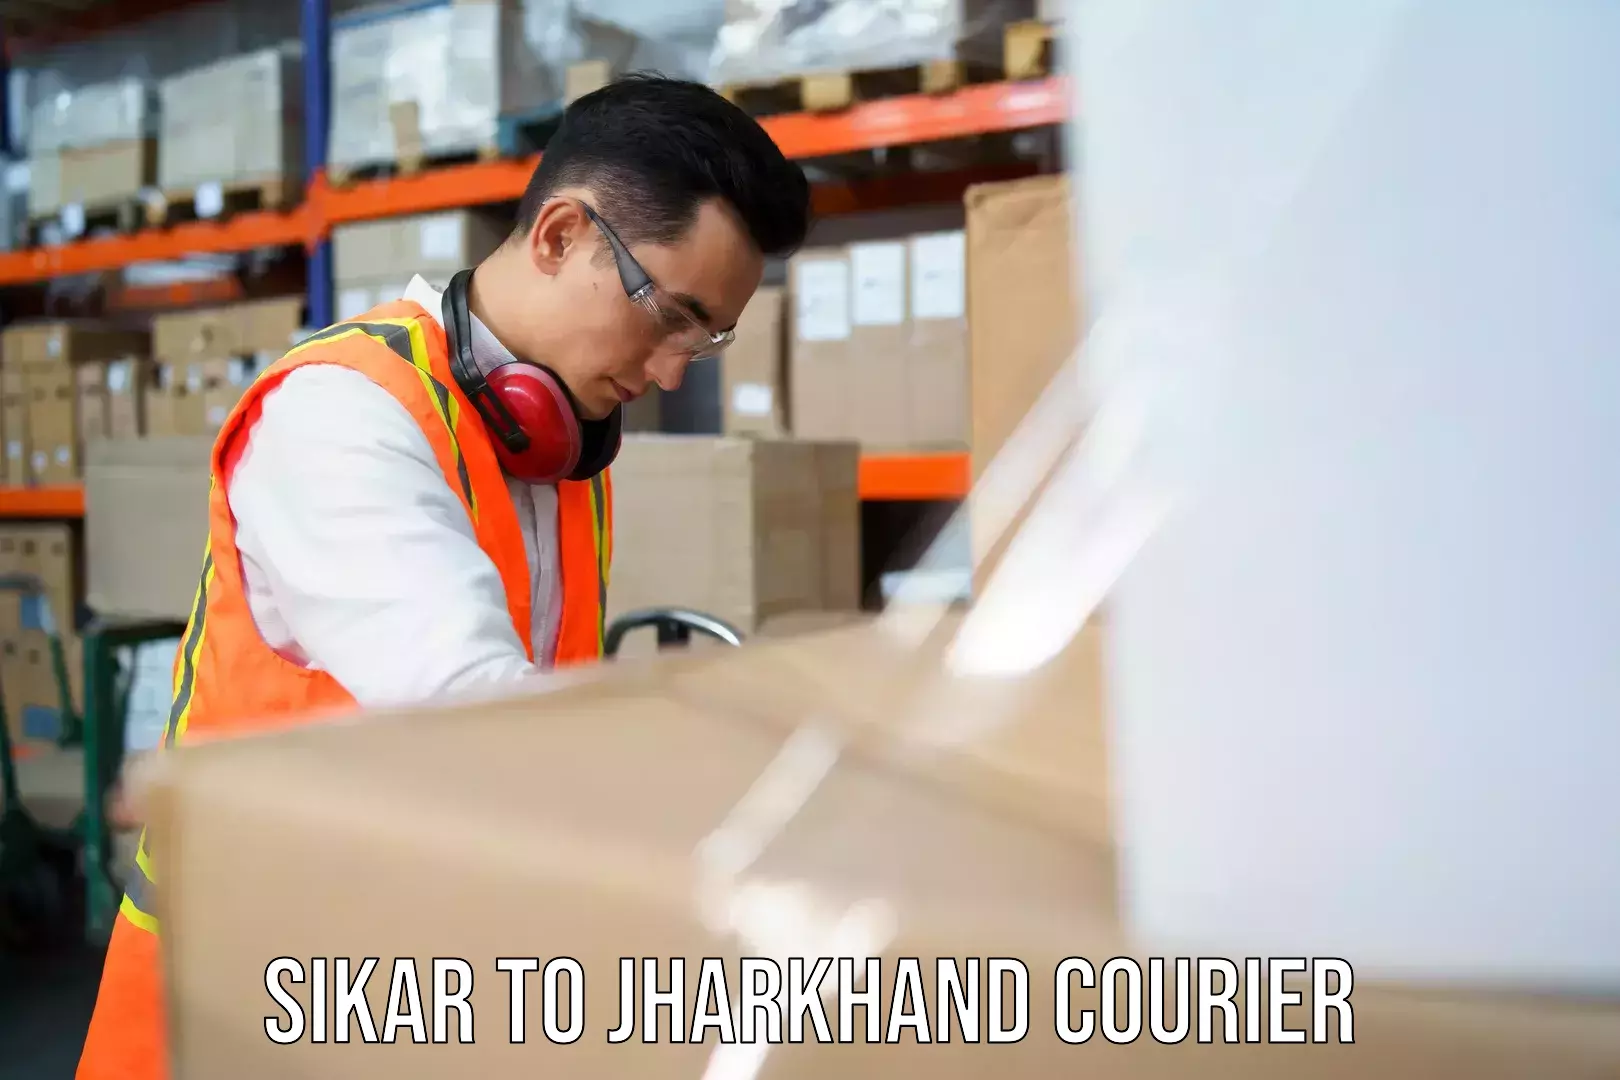 Courier service comparison Sikar to Tisri